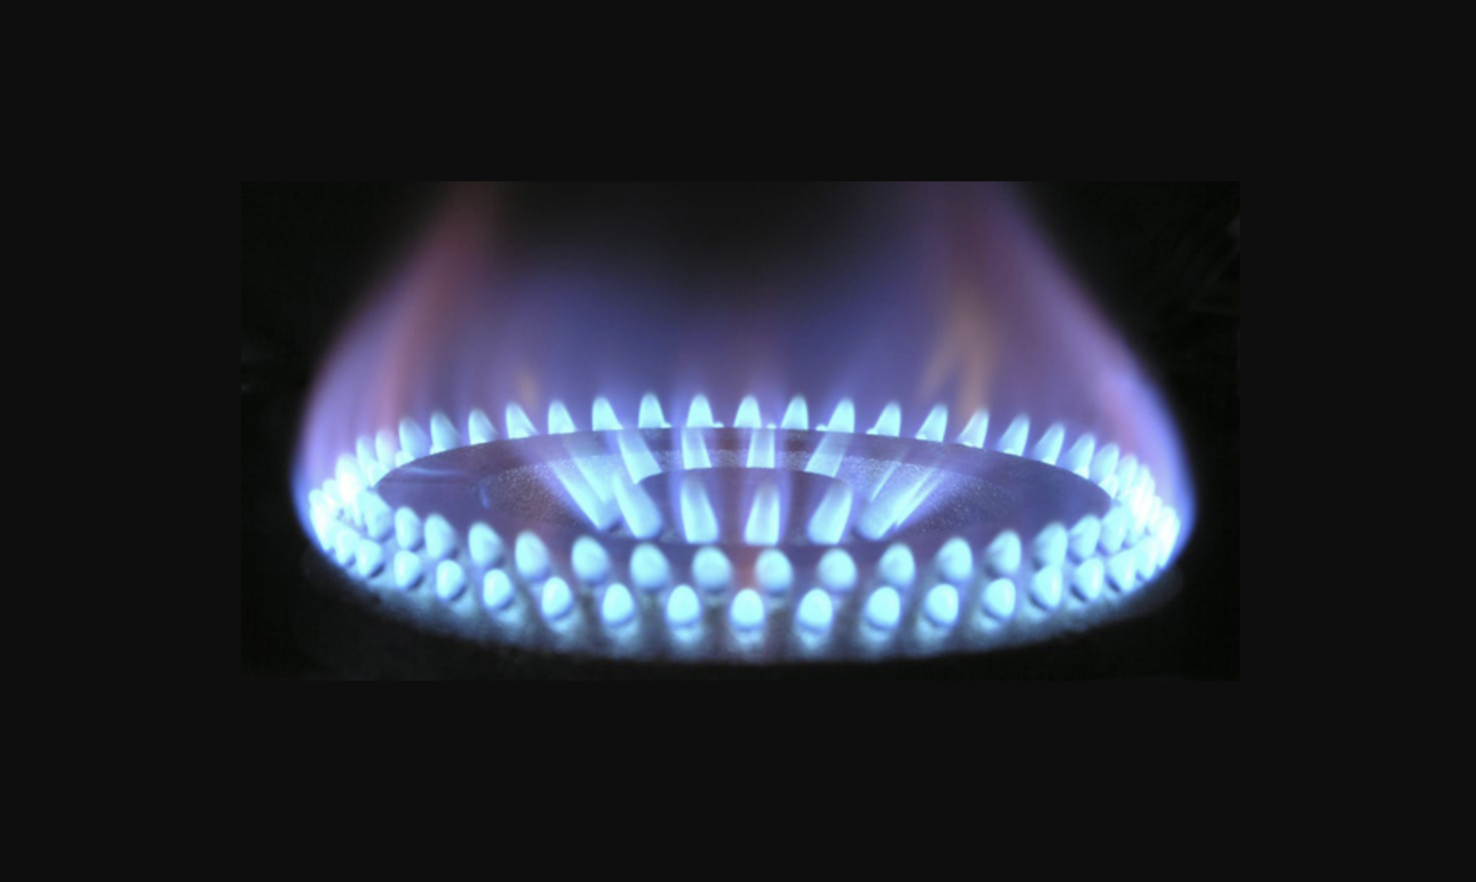 avista-announces-plan-to-raise-natural-gas-rates-by-12-3-on-nov-1